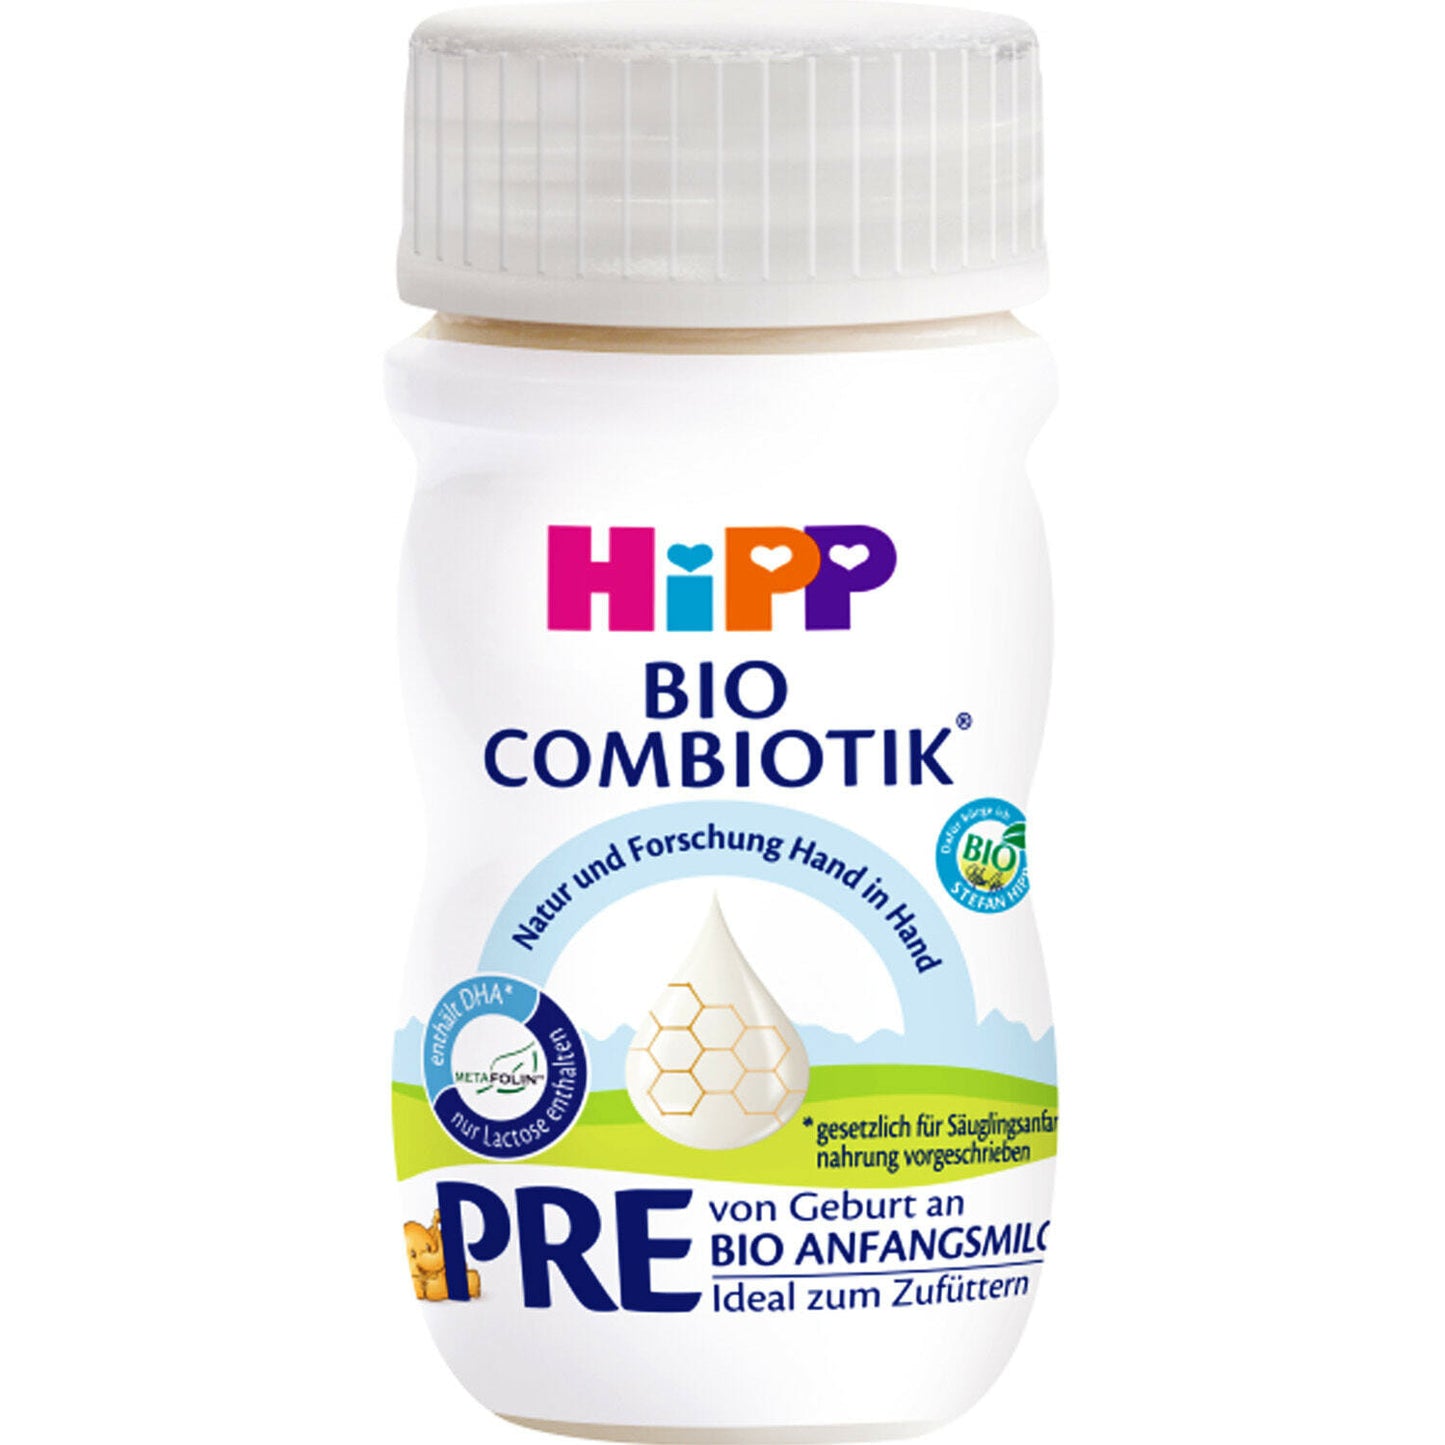 HiPP PRE Organic Combiotic – Ready to Feed 90ml